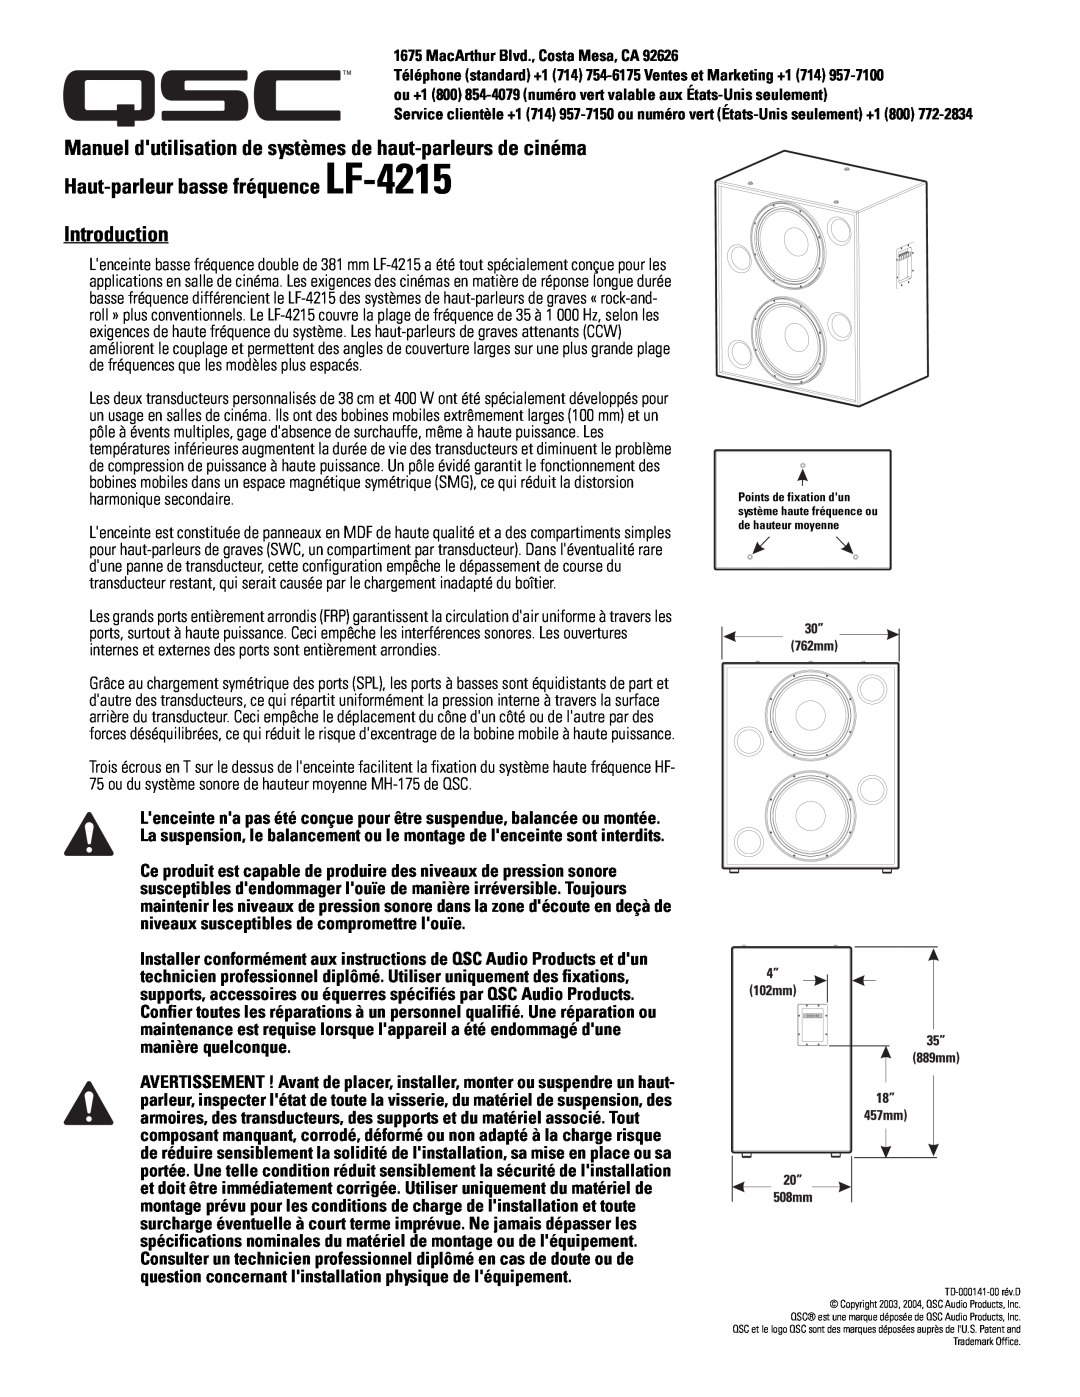 Polaroid LF-4215 user manual Introduction 